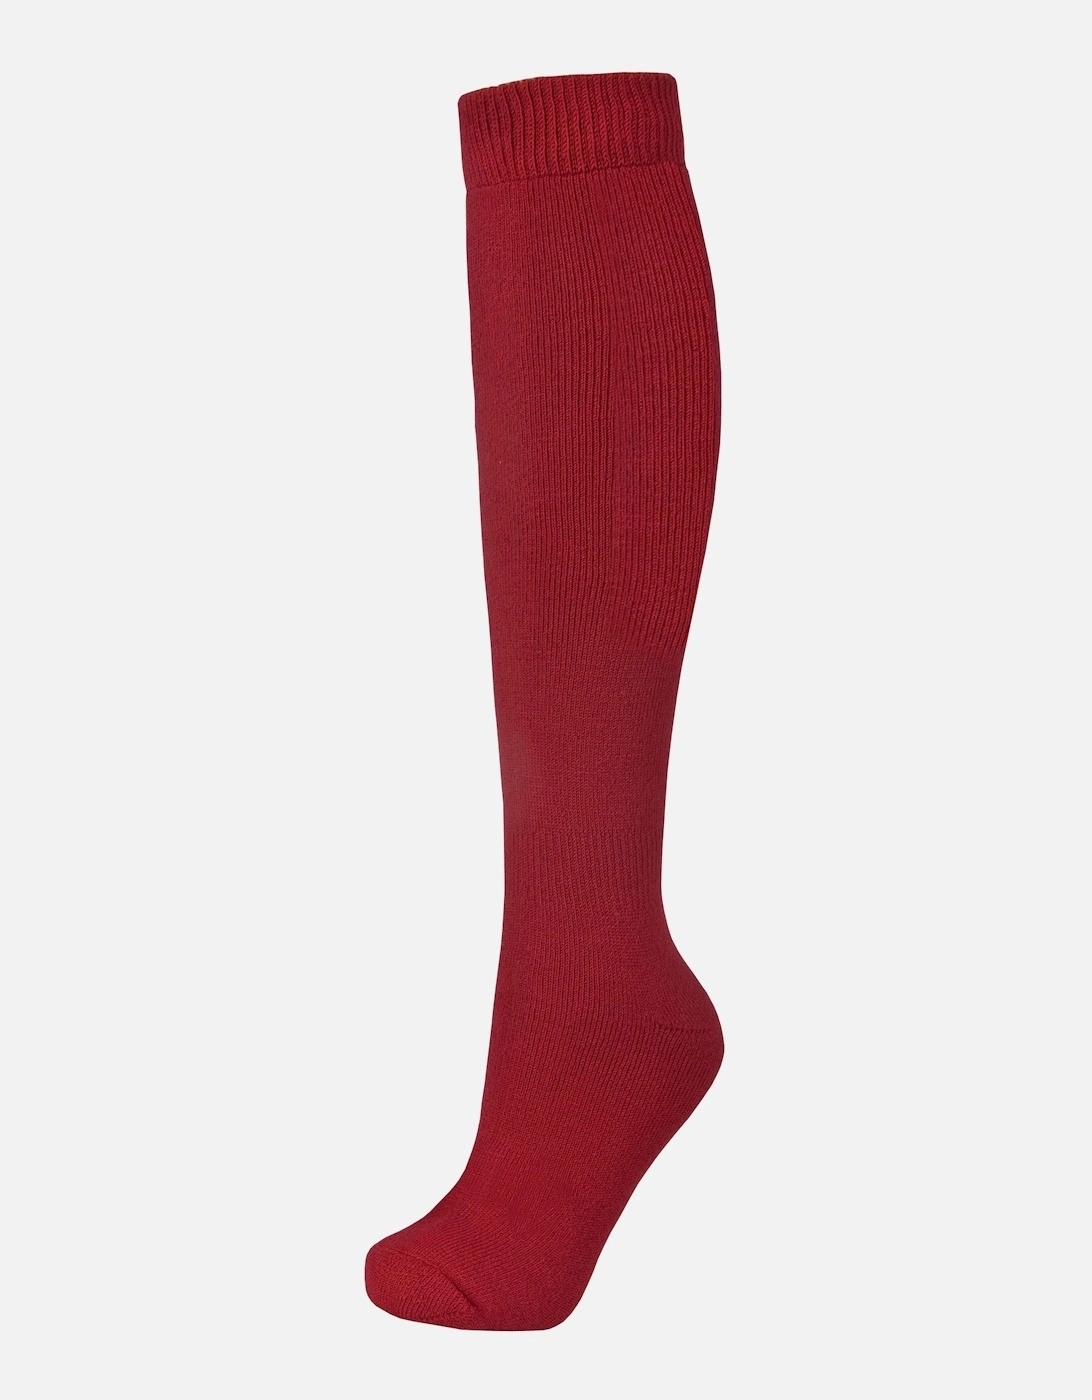 Adults Unisex Tech Luxury Merino Wool Blend Ski Tube Socks